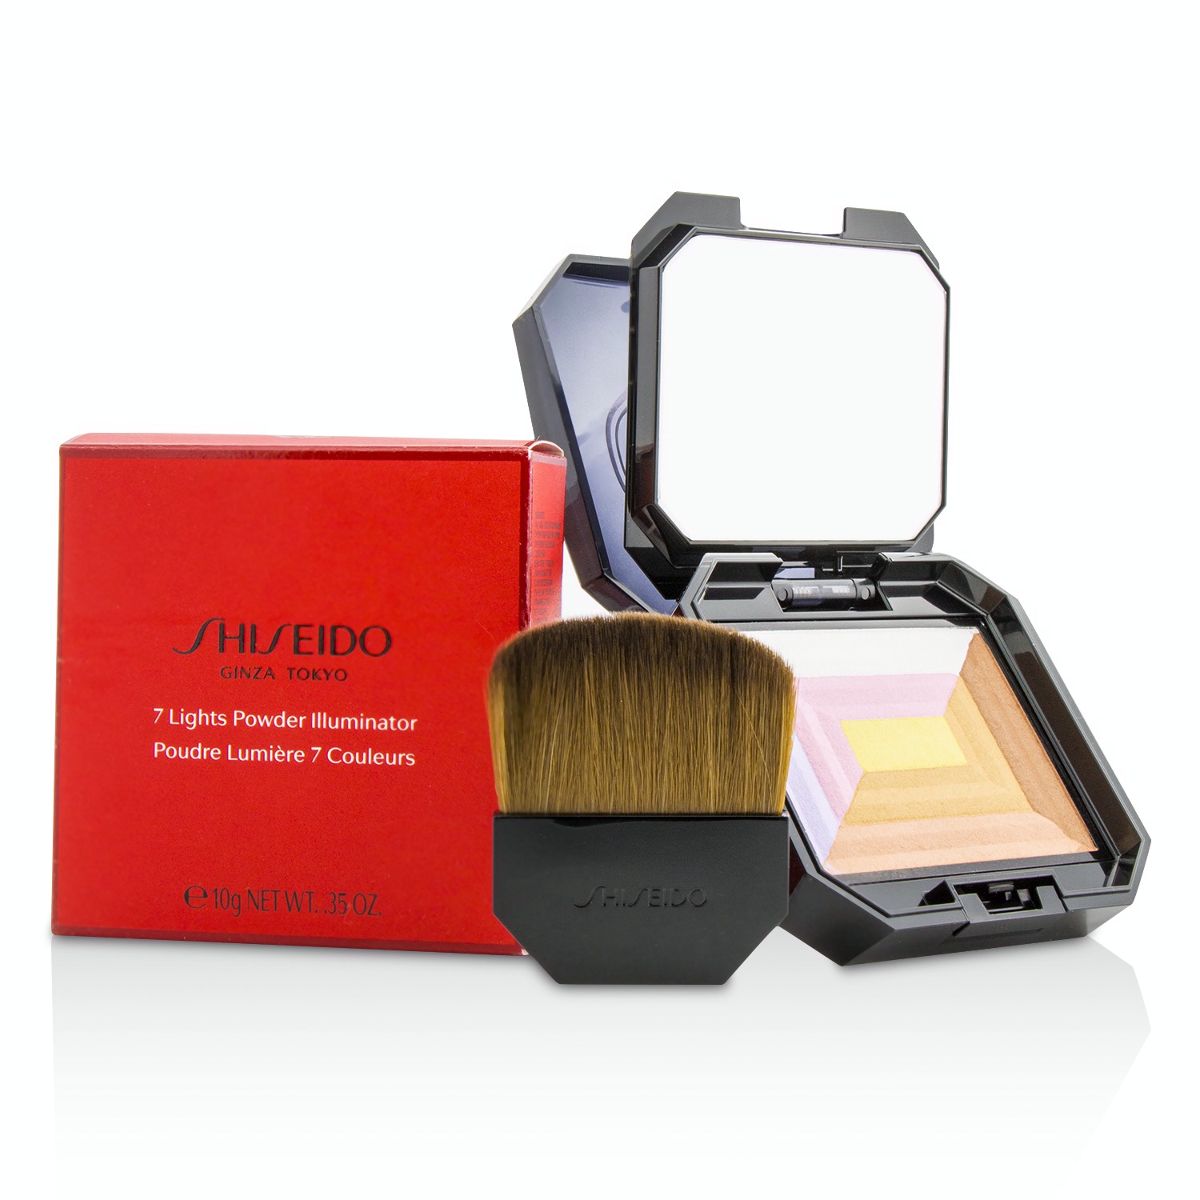 7 Lights Powder Illuminator Shiseido Image